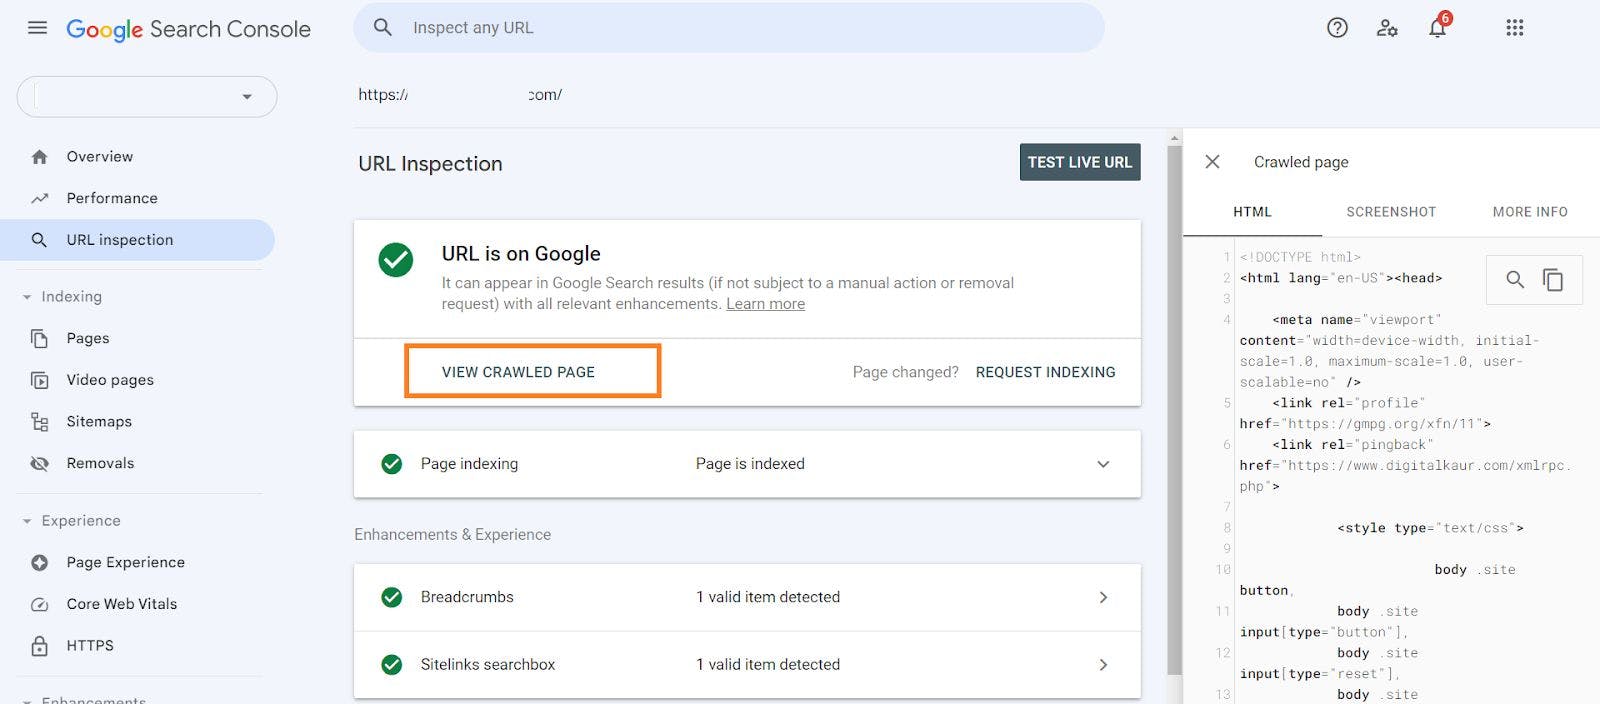 Google Search Console - URL Inspection screenshot